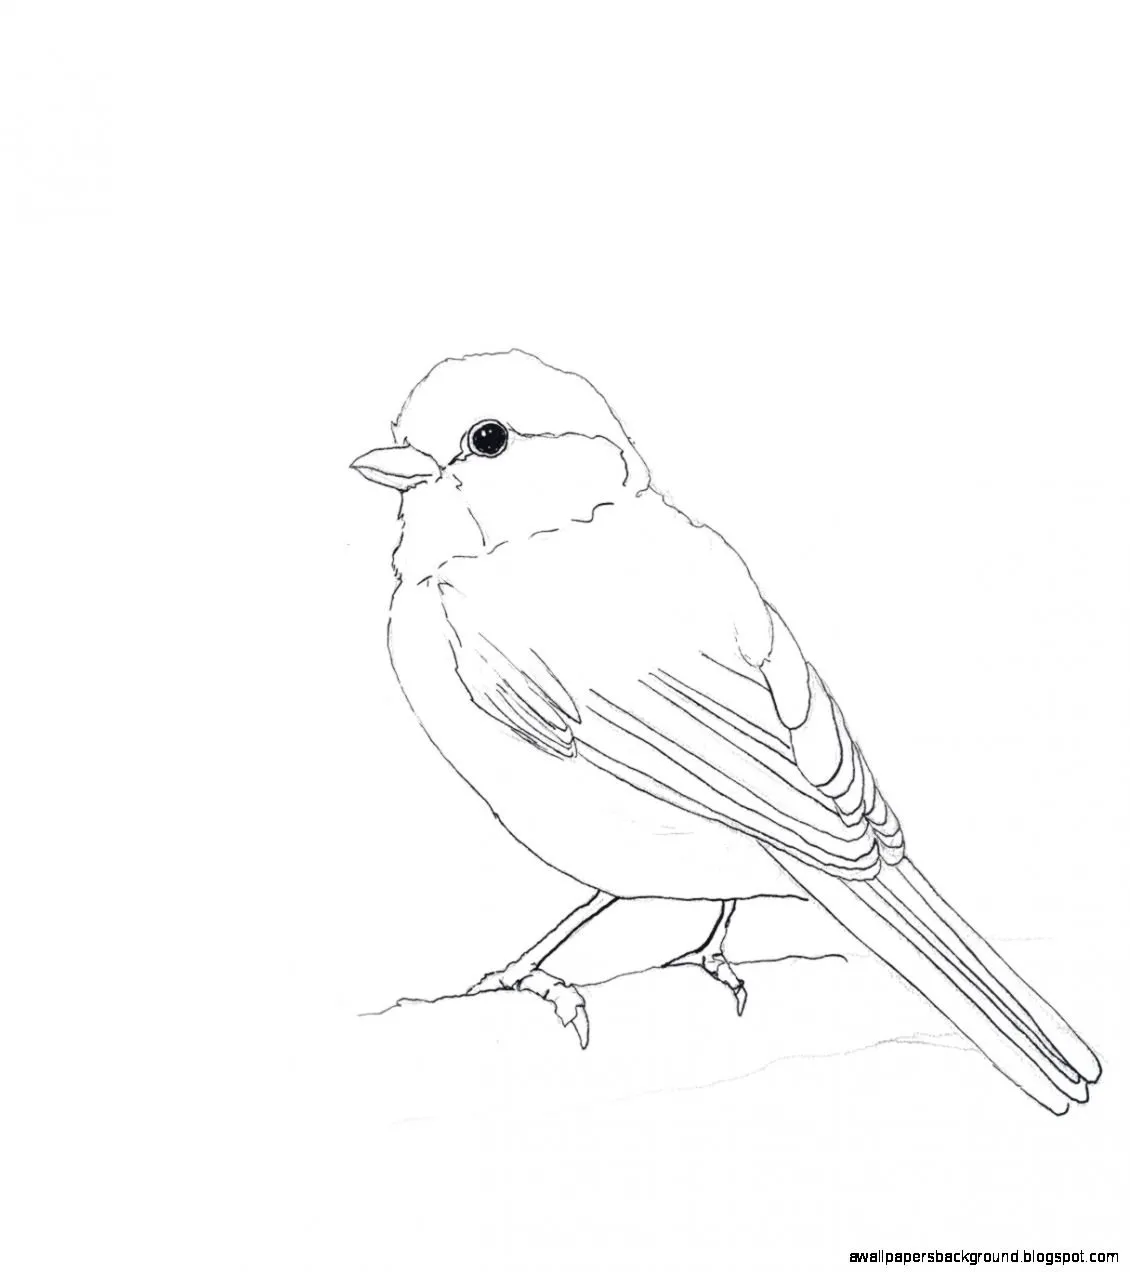 Птица рисунок. Рисунки птиц для срисовки. Птичка рисунок карандашом. Рисунок птички карандашом для срисовки.